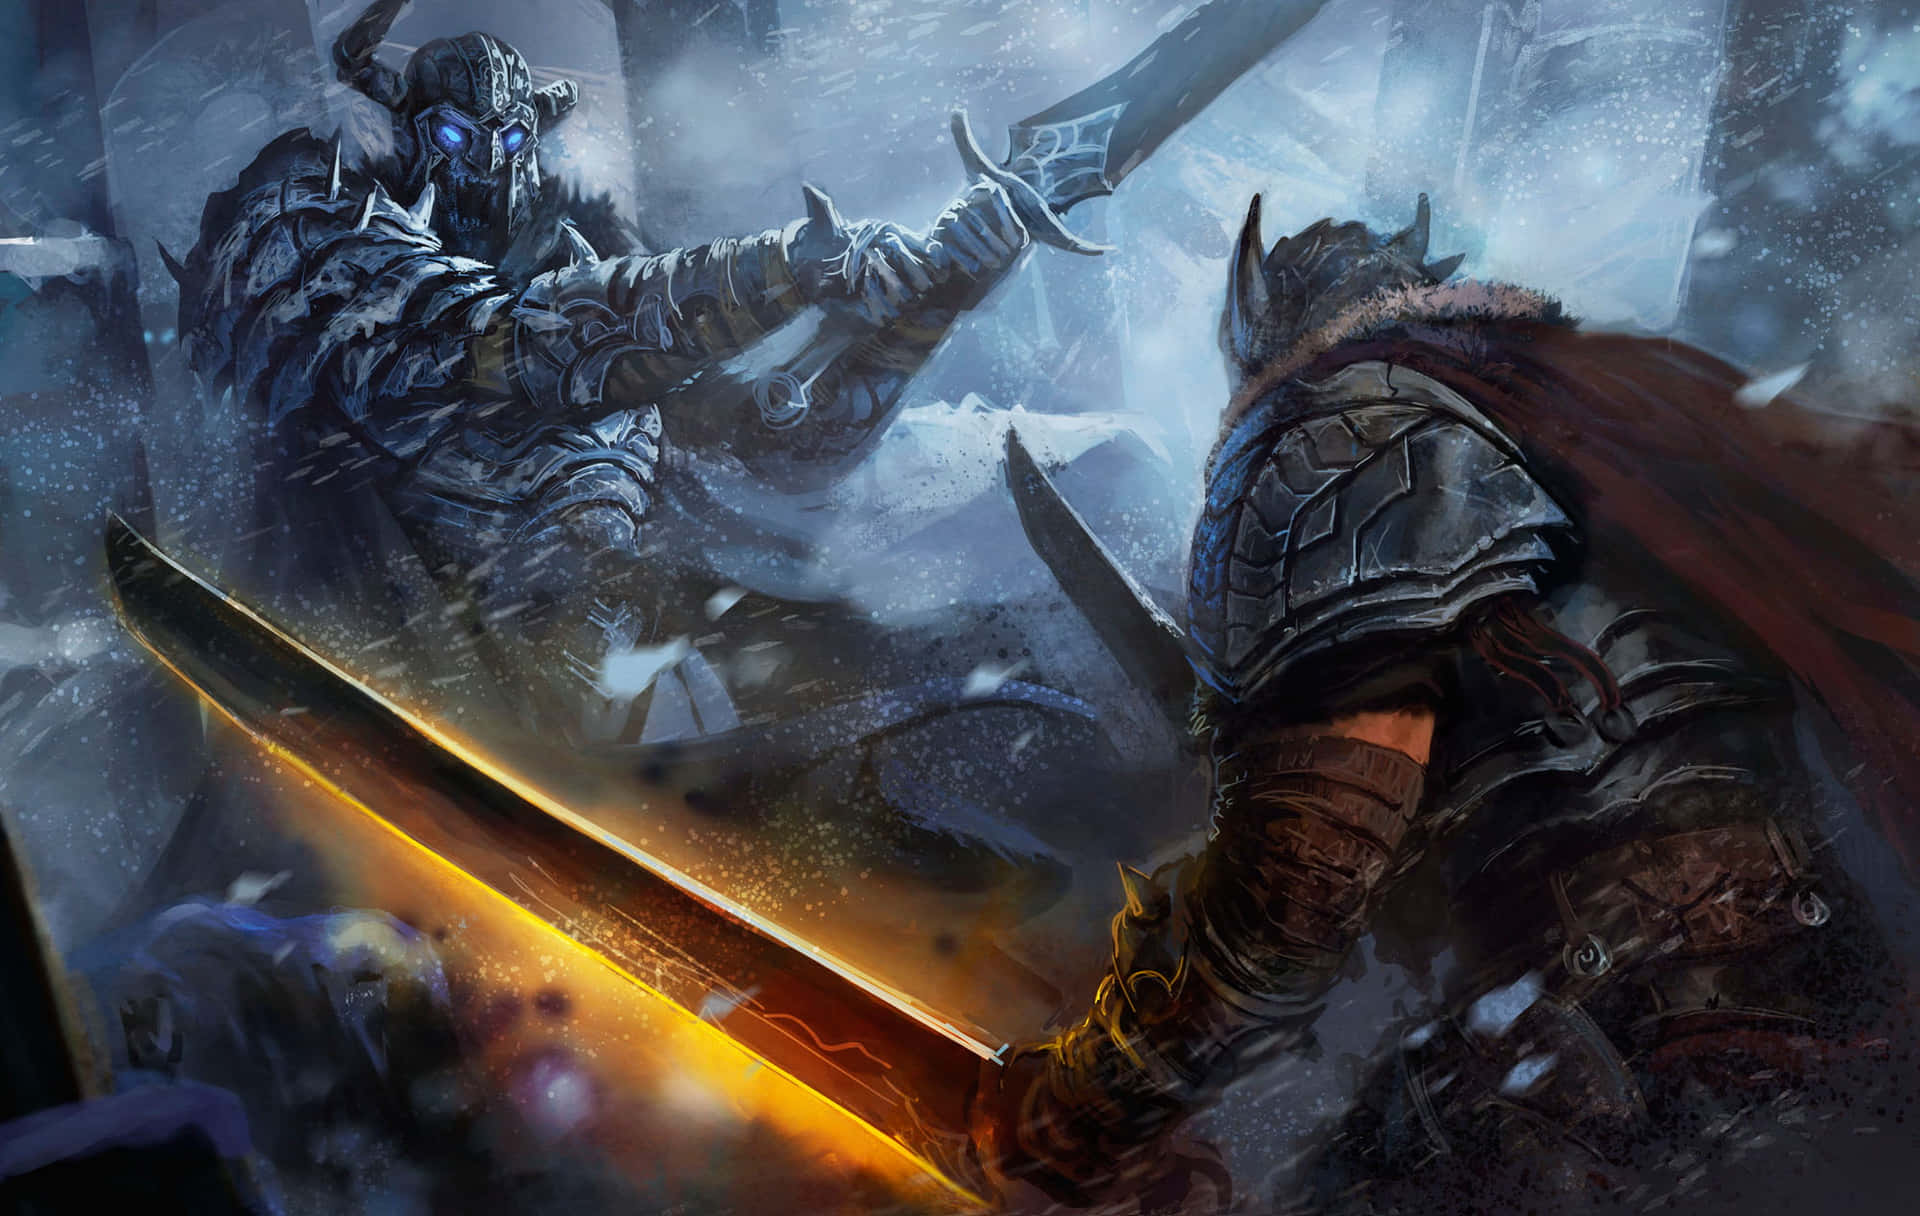 Epic Fantasy Battle Artwork Wallpaper